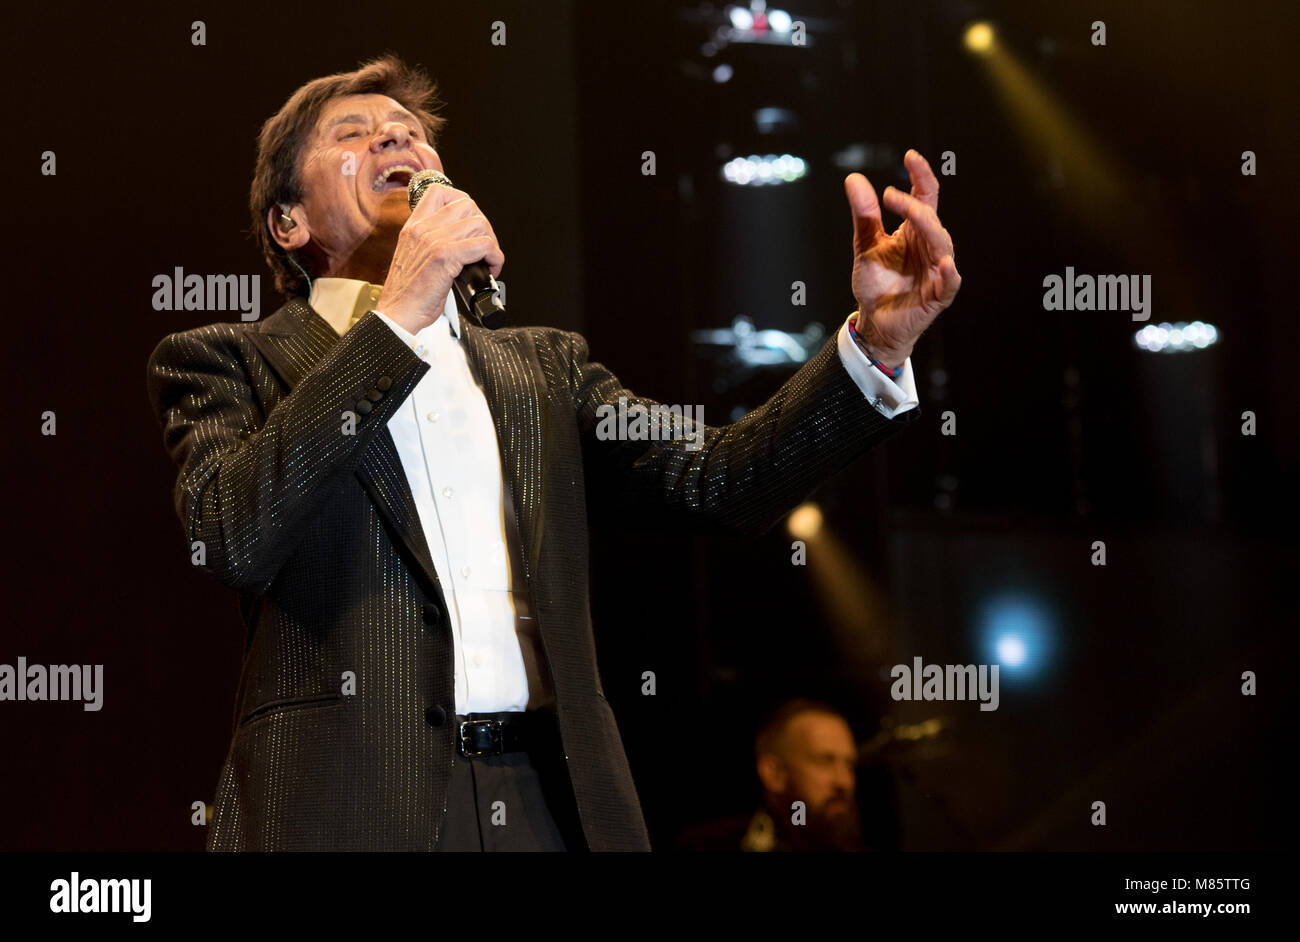 Gianni Morandi in Konzert in Neapel Etappe dieser Tour, in der die berühmte Künstlerin präsentiert sein neues Album D'amore d'Autore" im November 2017 freigegeben. 13.03.2018, Neapel, Italien Stockfoto